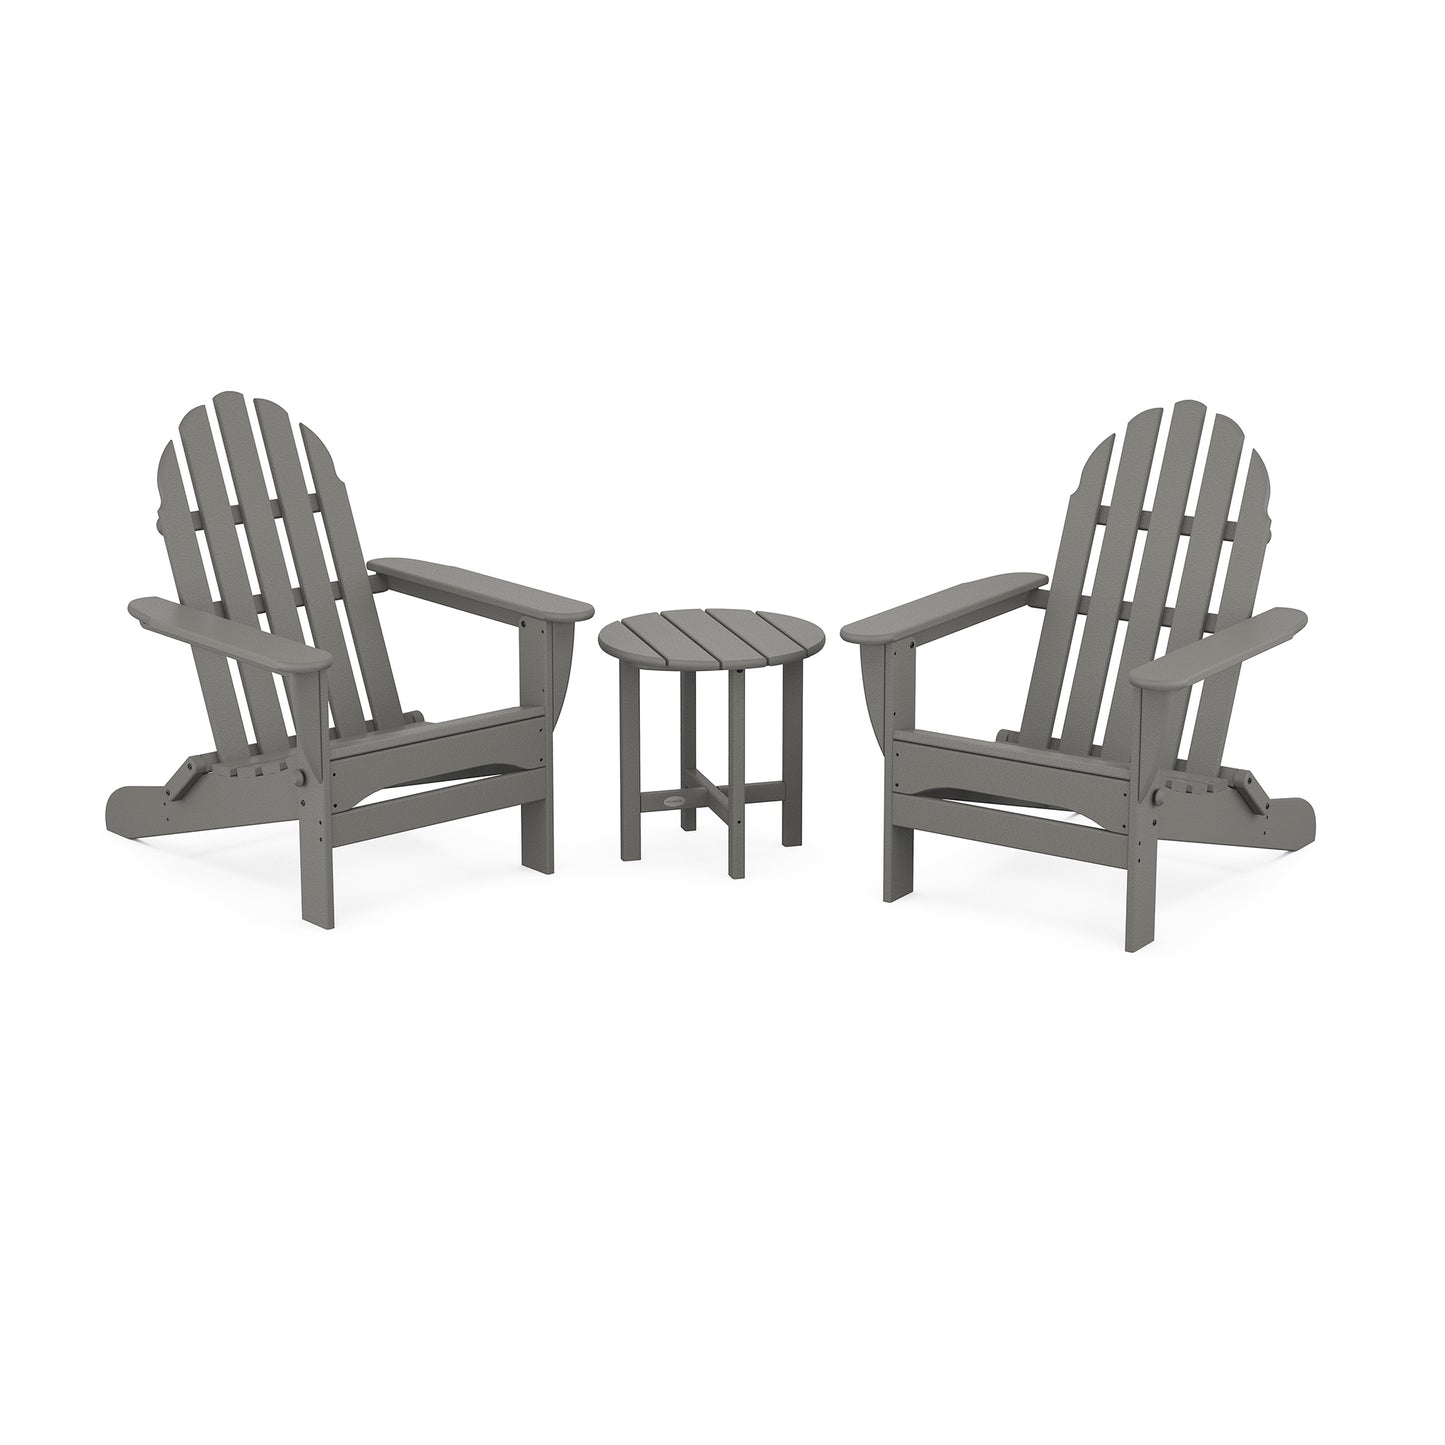 Three gray POLYWOOD Classic Folding Adirondack 3-Piece Set chairs on a white background.